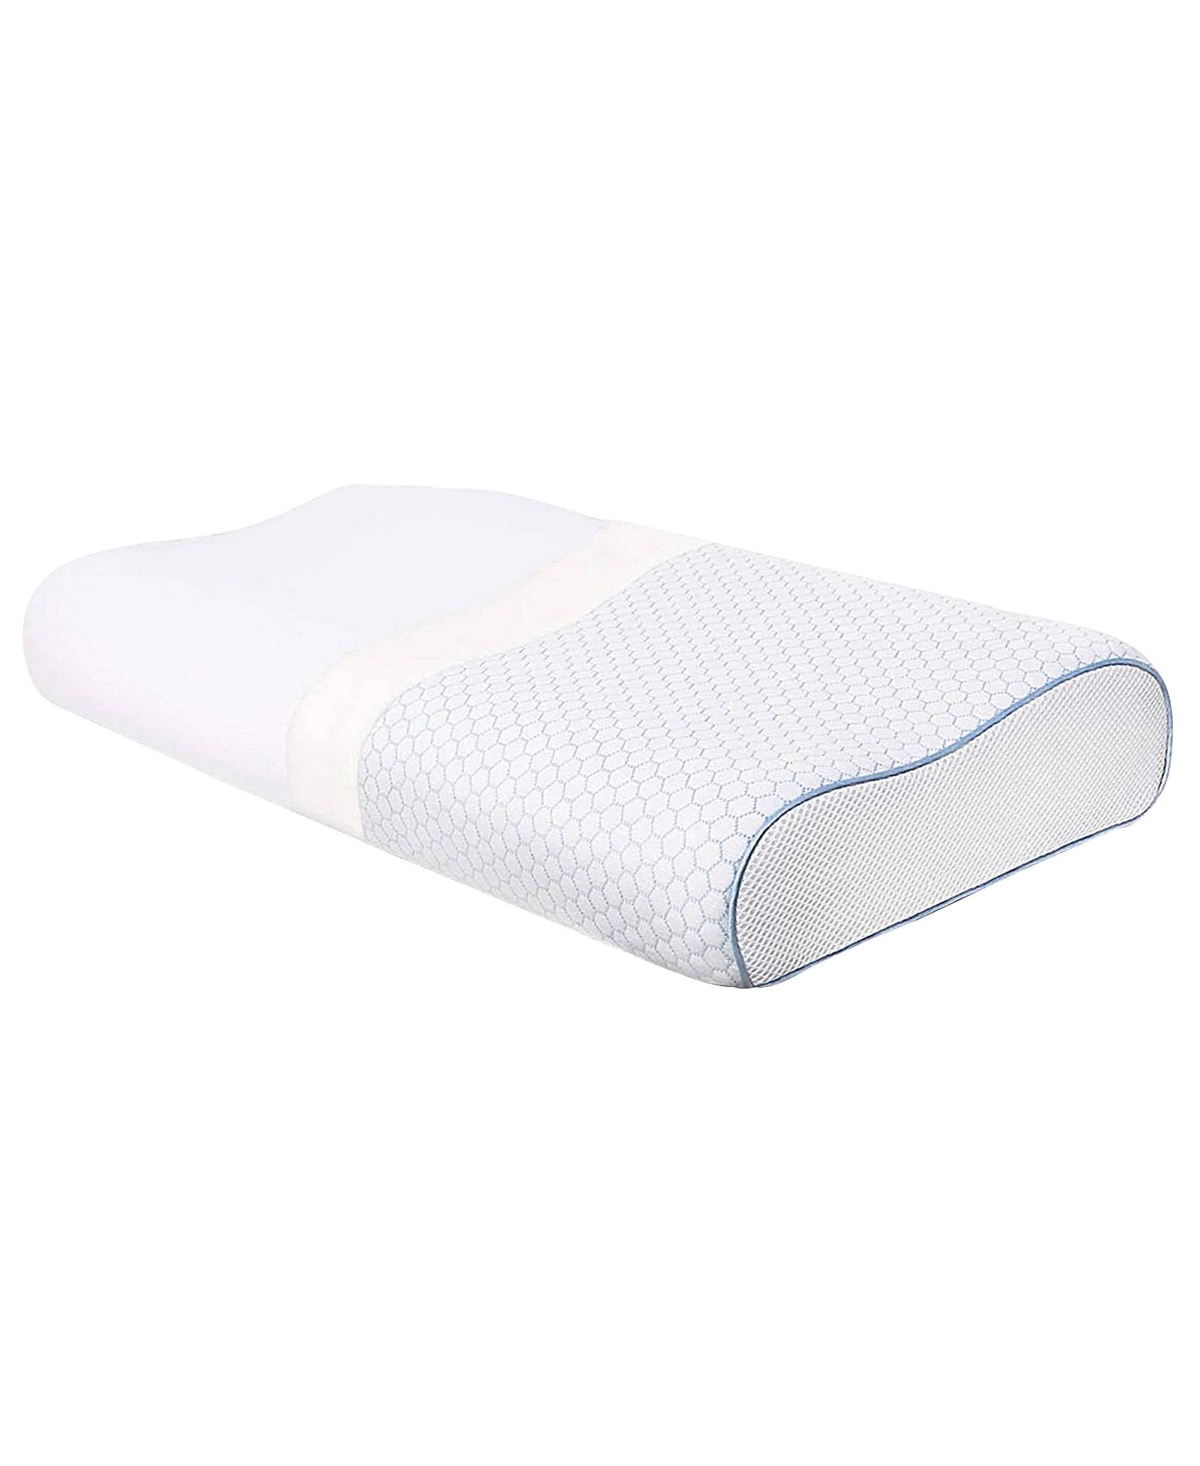 Dr Pillow Sepoveda Contour Memory Foam Pillow In White